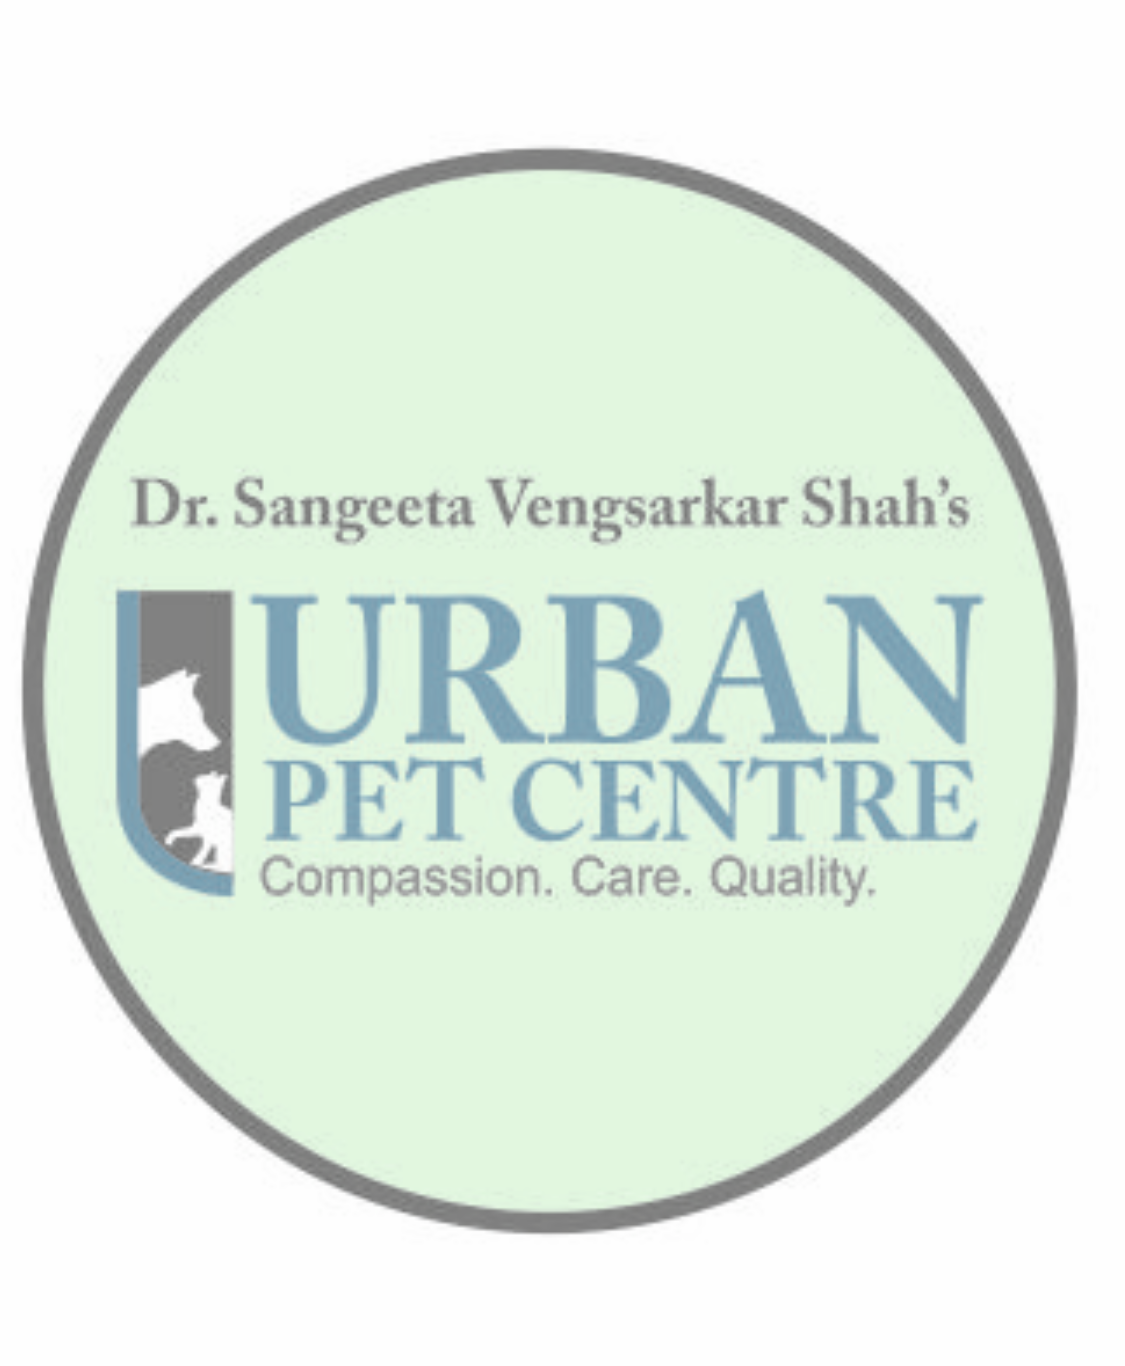 Urban Pet Centre|Healthcare|Medical Services